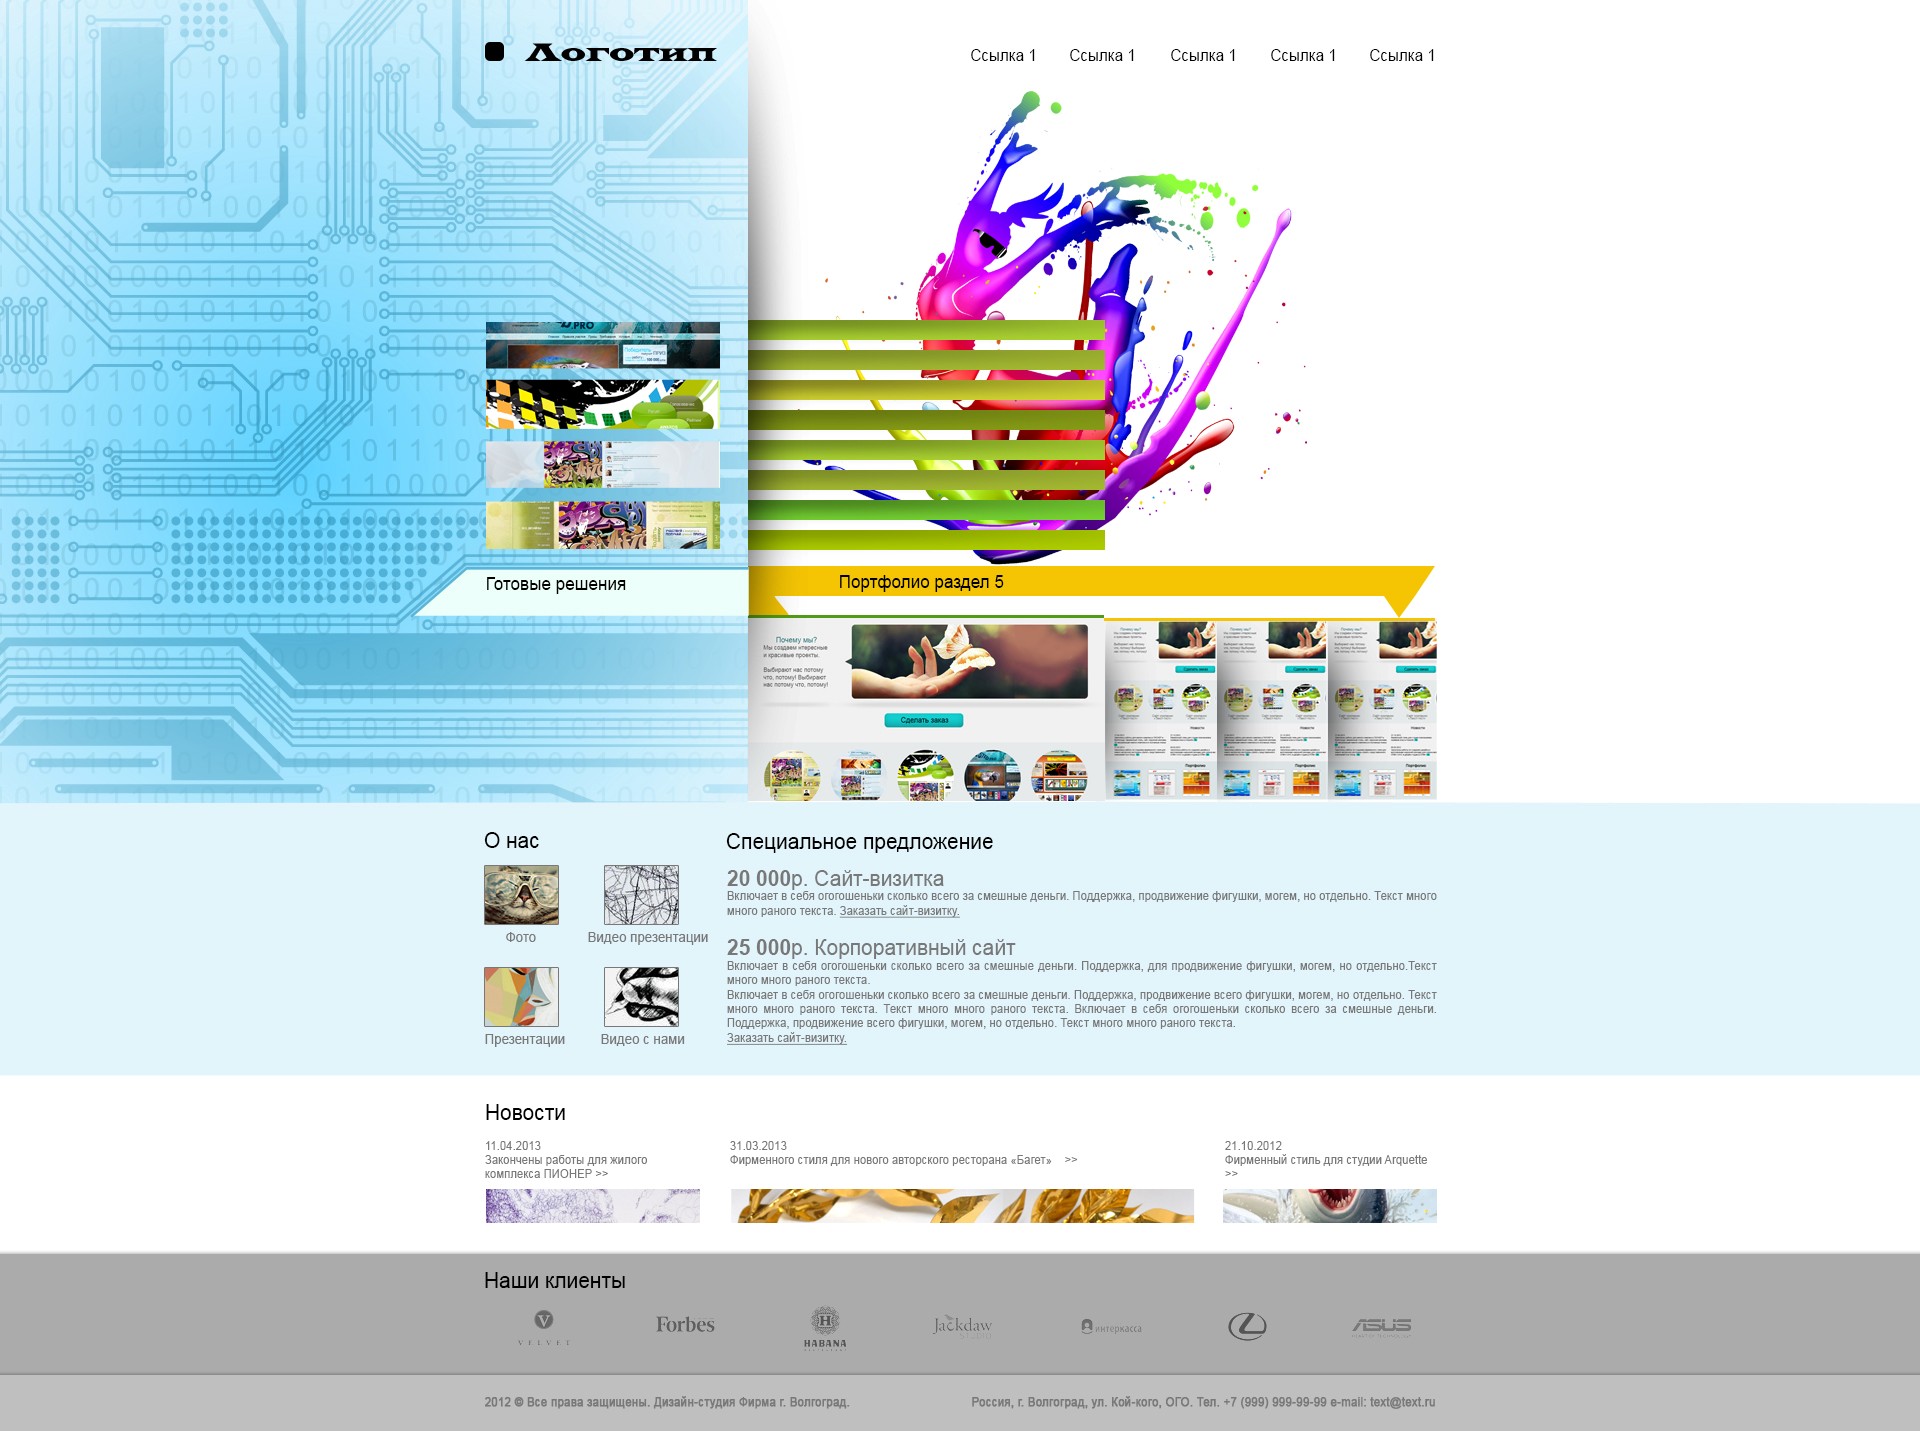 Веб Шаблон сайта "Дизайн студия" в psd + html 5